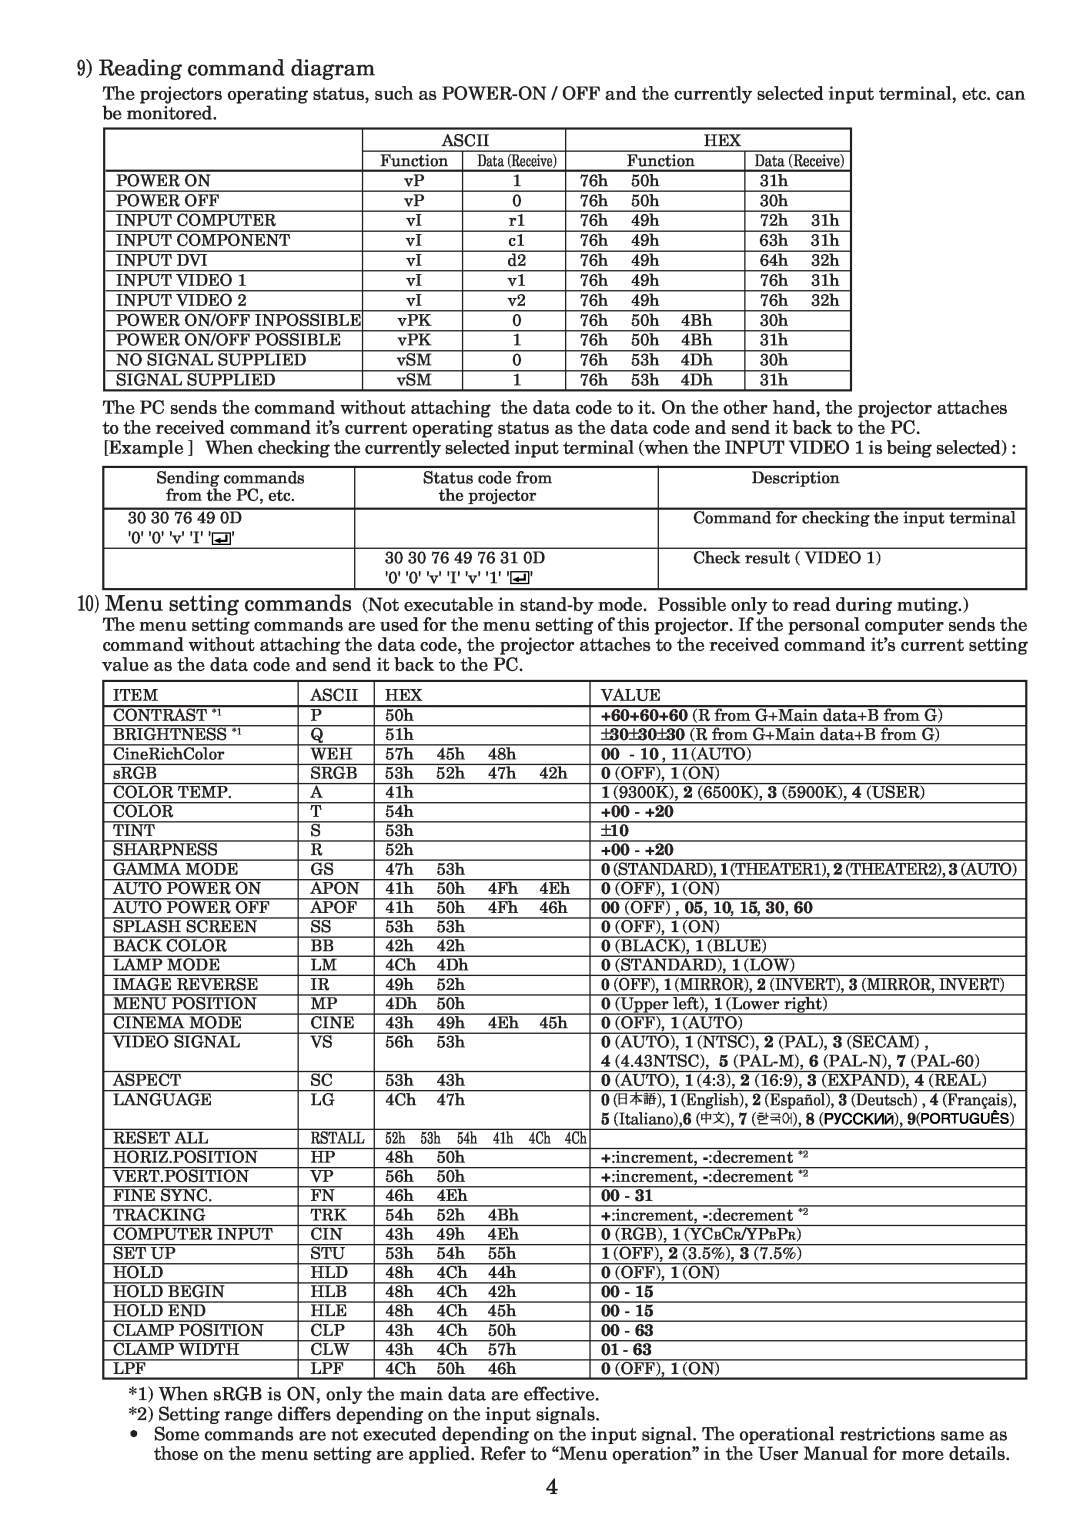 Mitsubishi Electronics HC900E manual Reading command diagram, 0 OFF, 1 MIRROR, 2 INVERT, 3 MIRROR, INVERT 